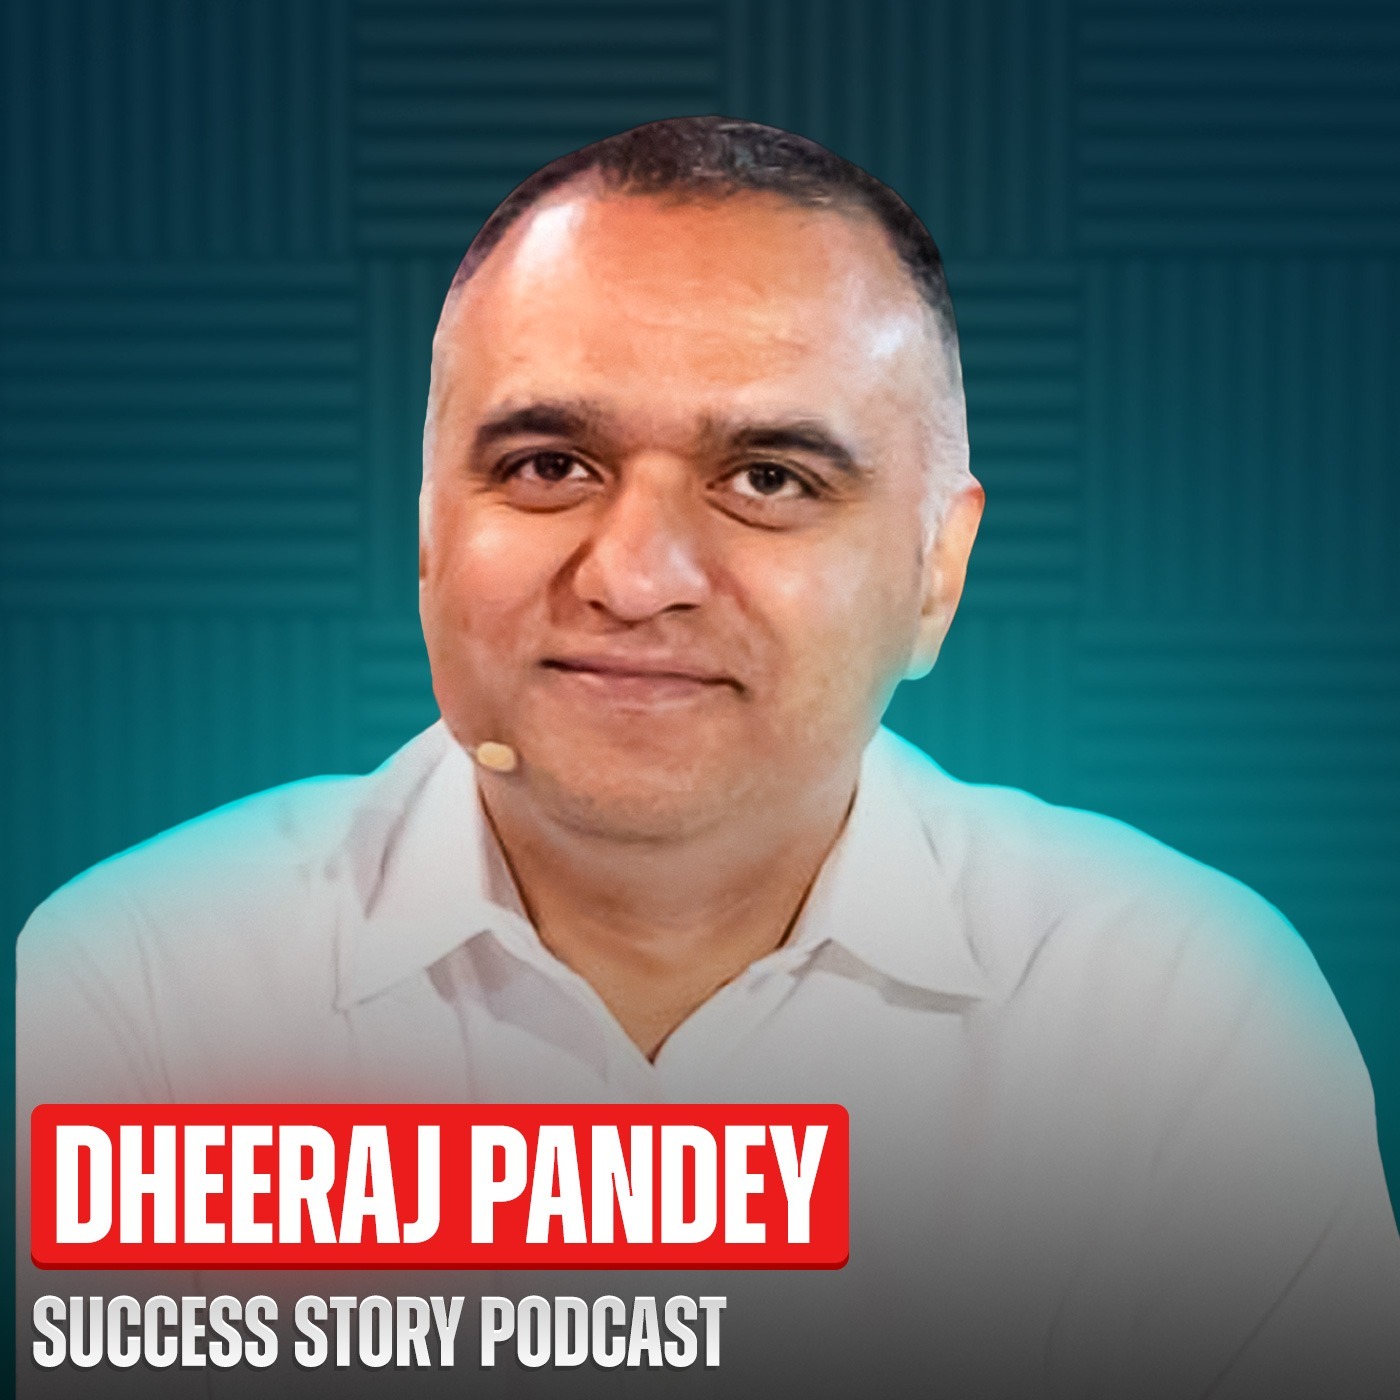 Dheeraj Pandey - Board Member at Adobe, Co-founder at Nutanix | Investing in Innovation